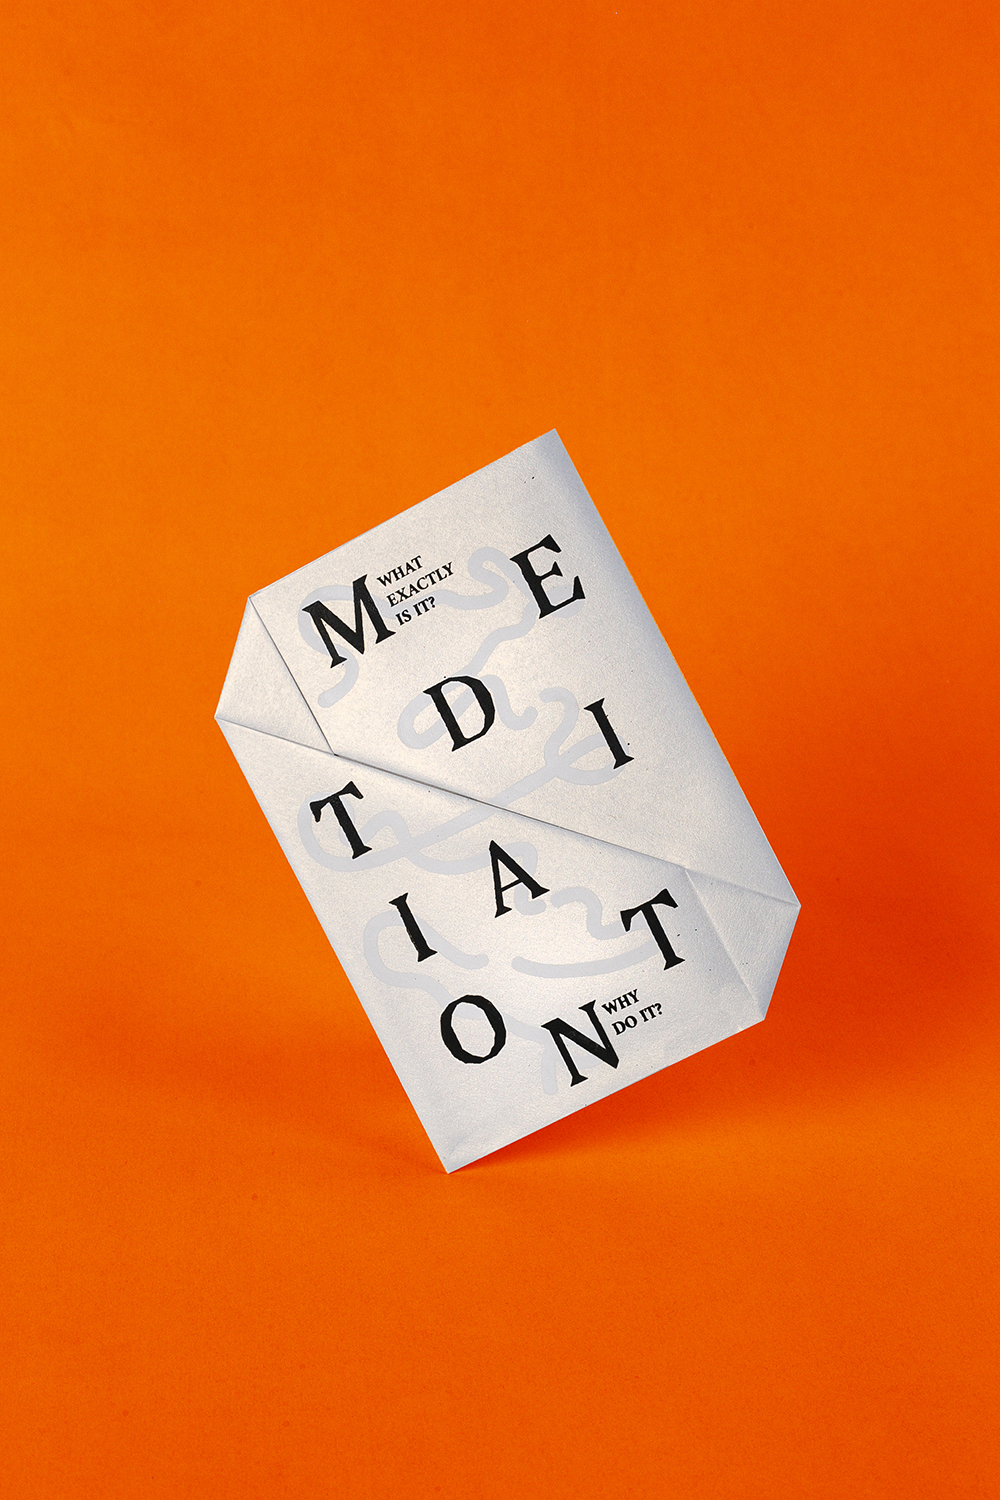 Meditation leaflet by Eugenia Wasylczenko